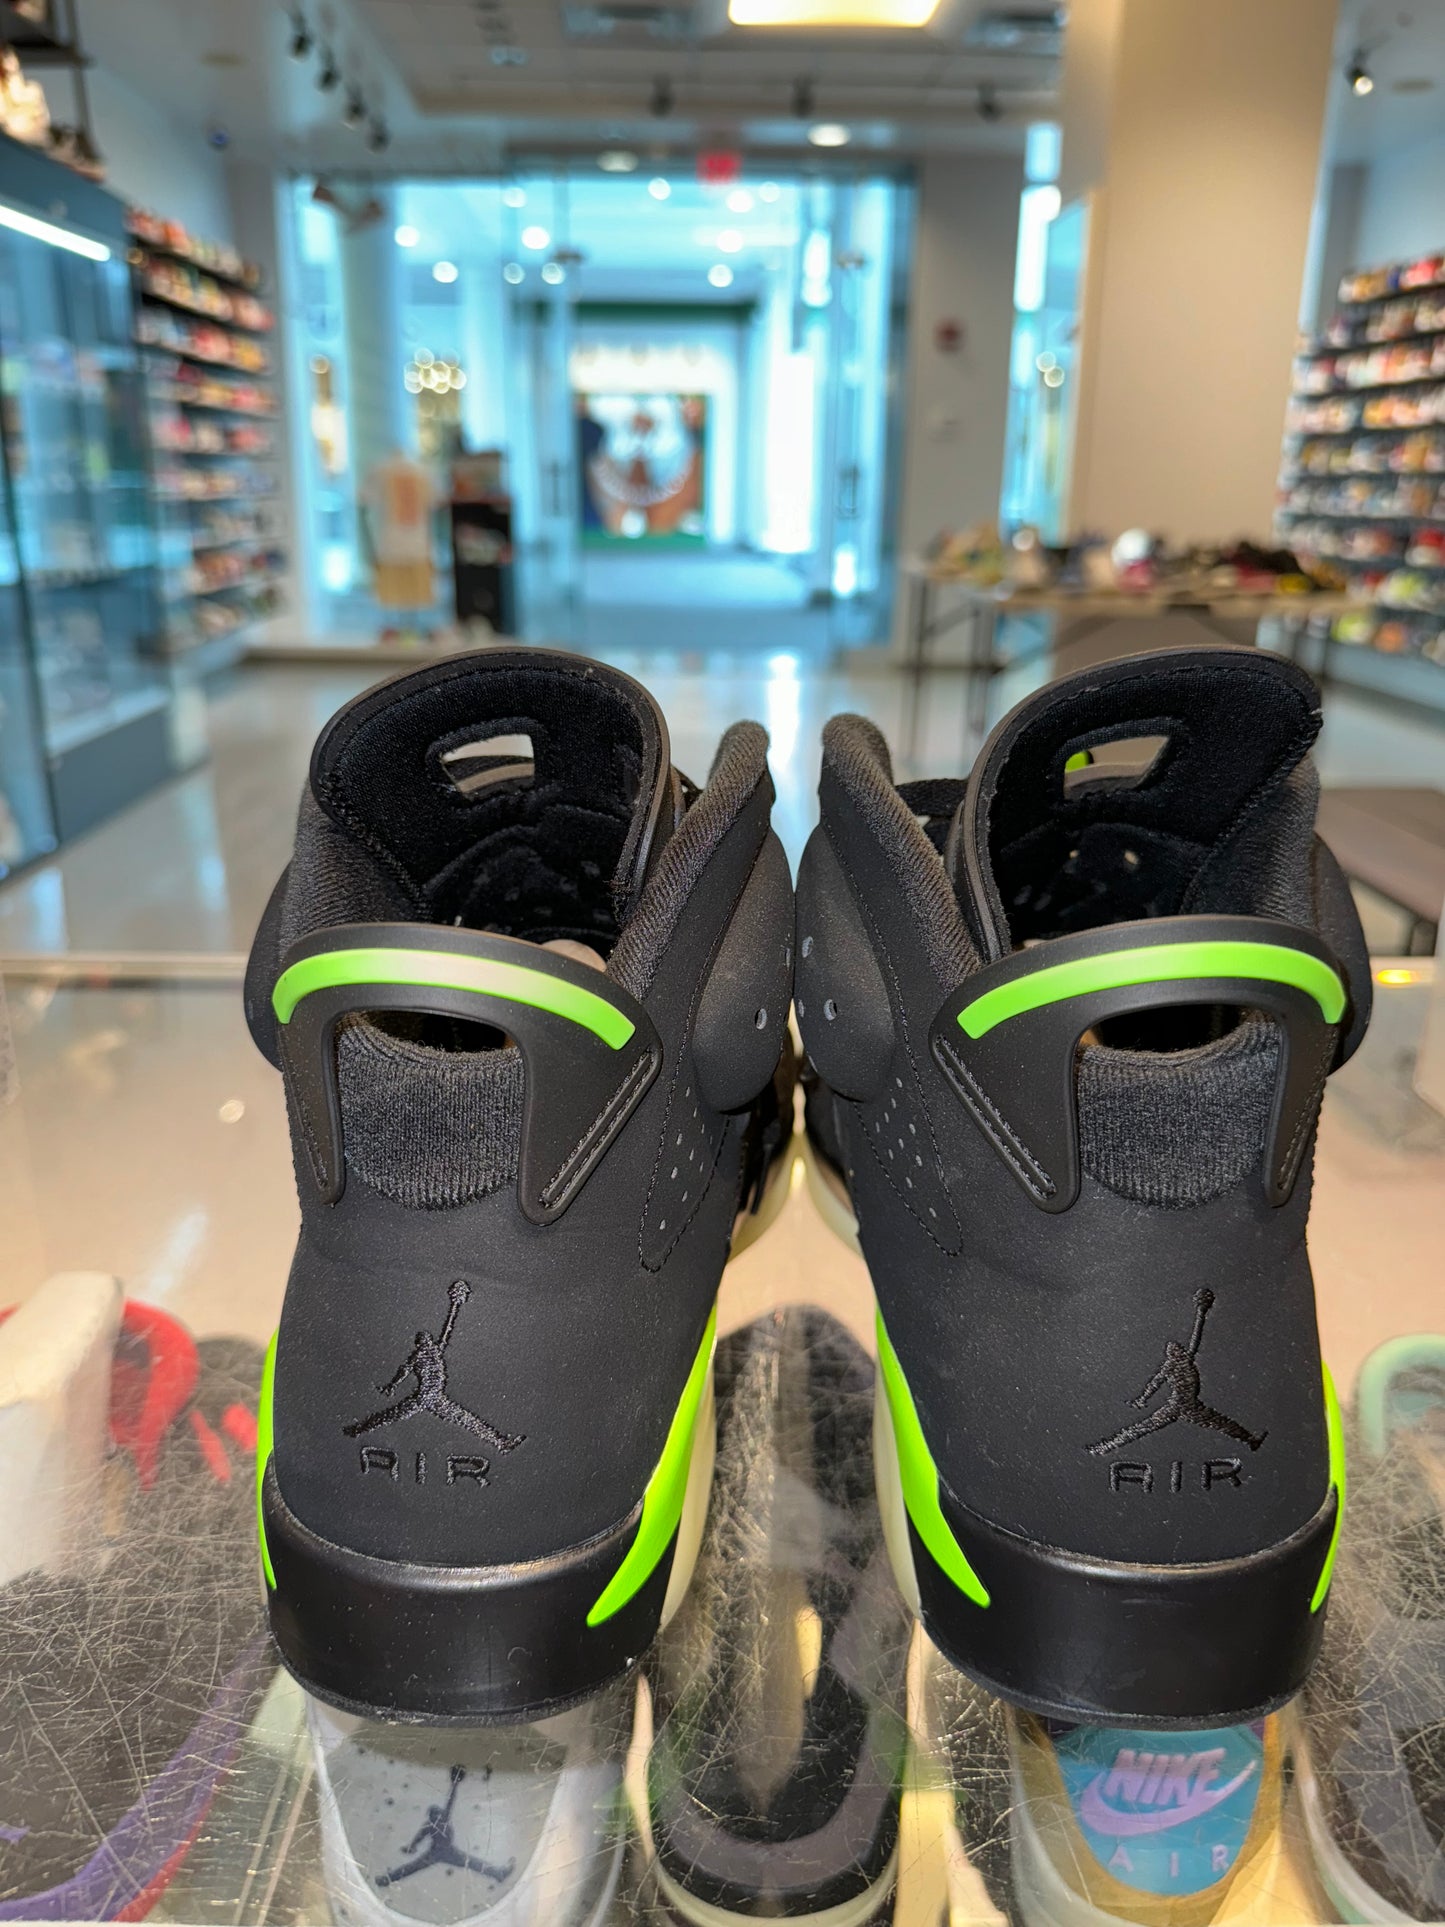 Size 11 Air Jordan 6 “Electric Green” (Mall)